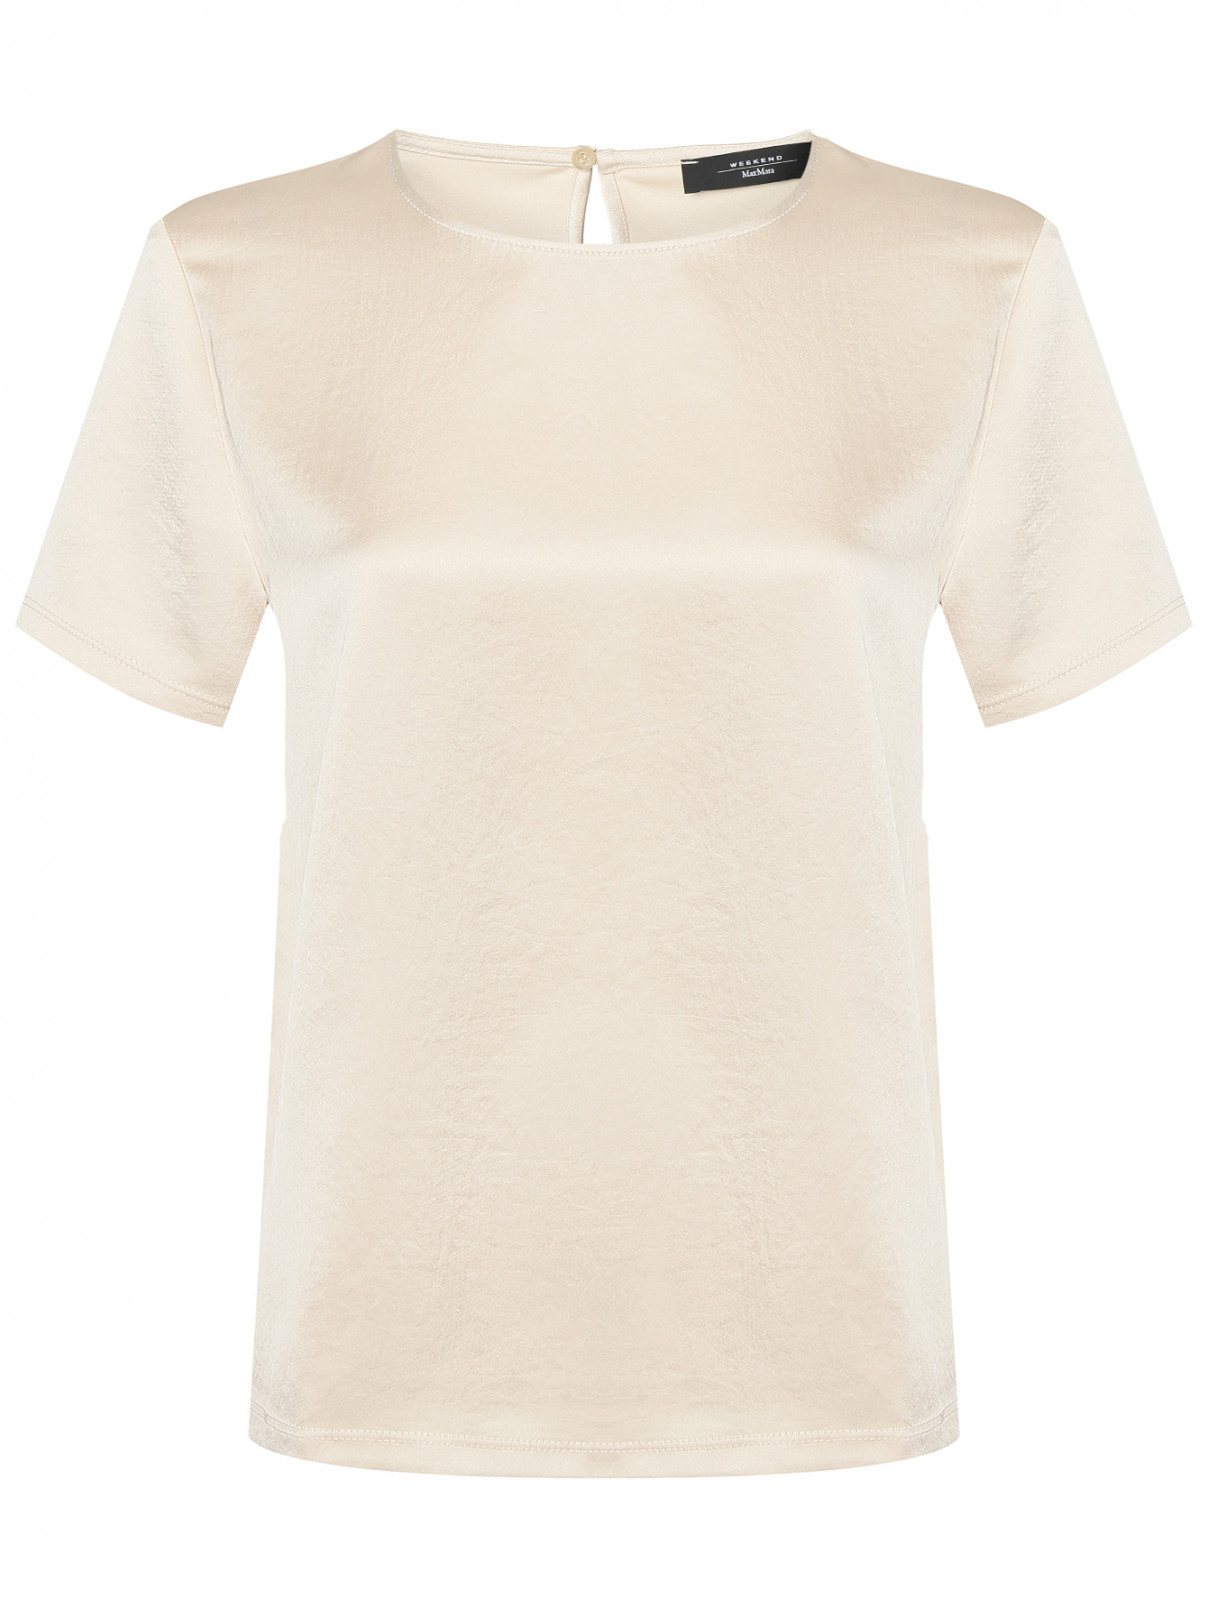 Блуза базовая с короткими рукавами Weekend Max Mara  –  Общий вид  – Цвет:  Бежевый